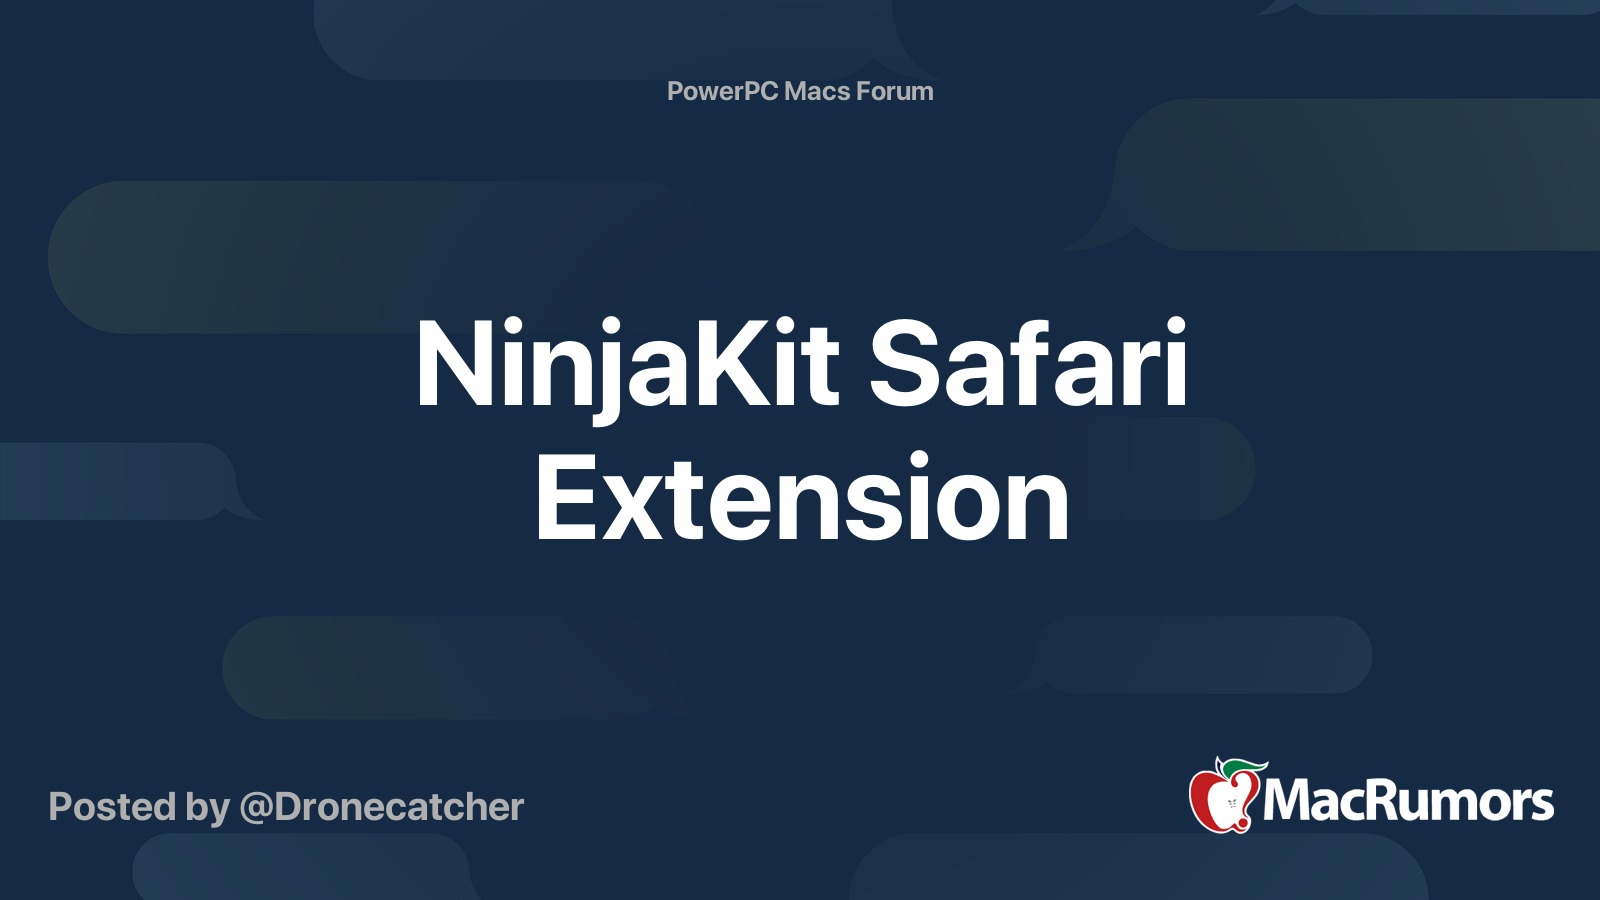 safari ninja kit extension website